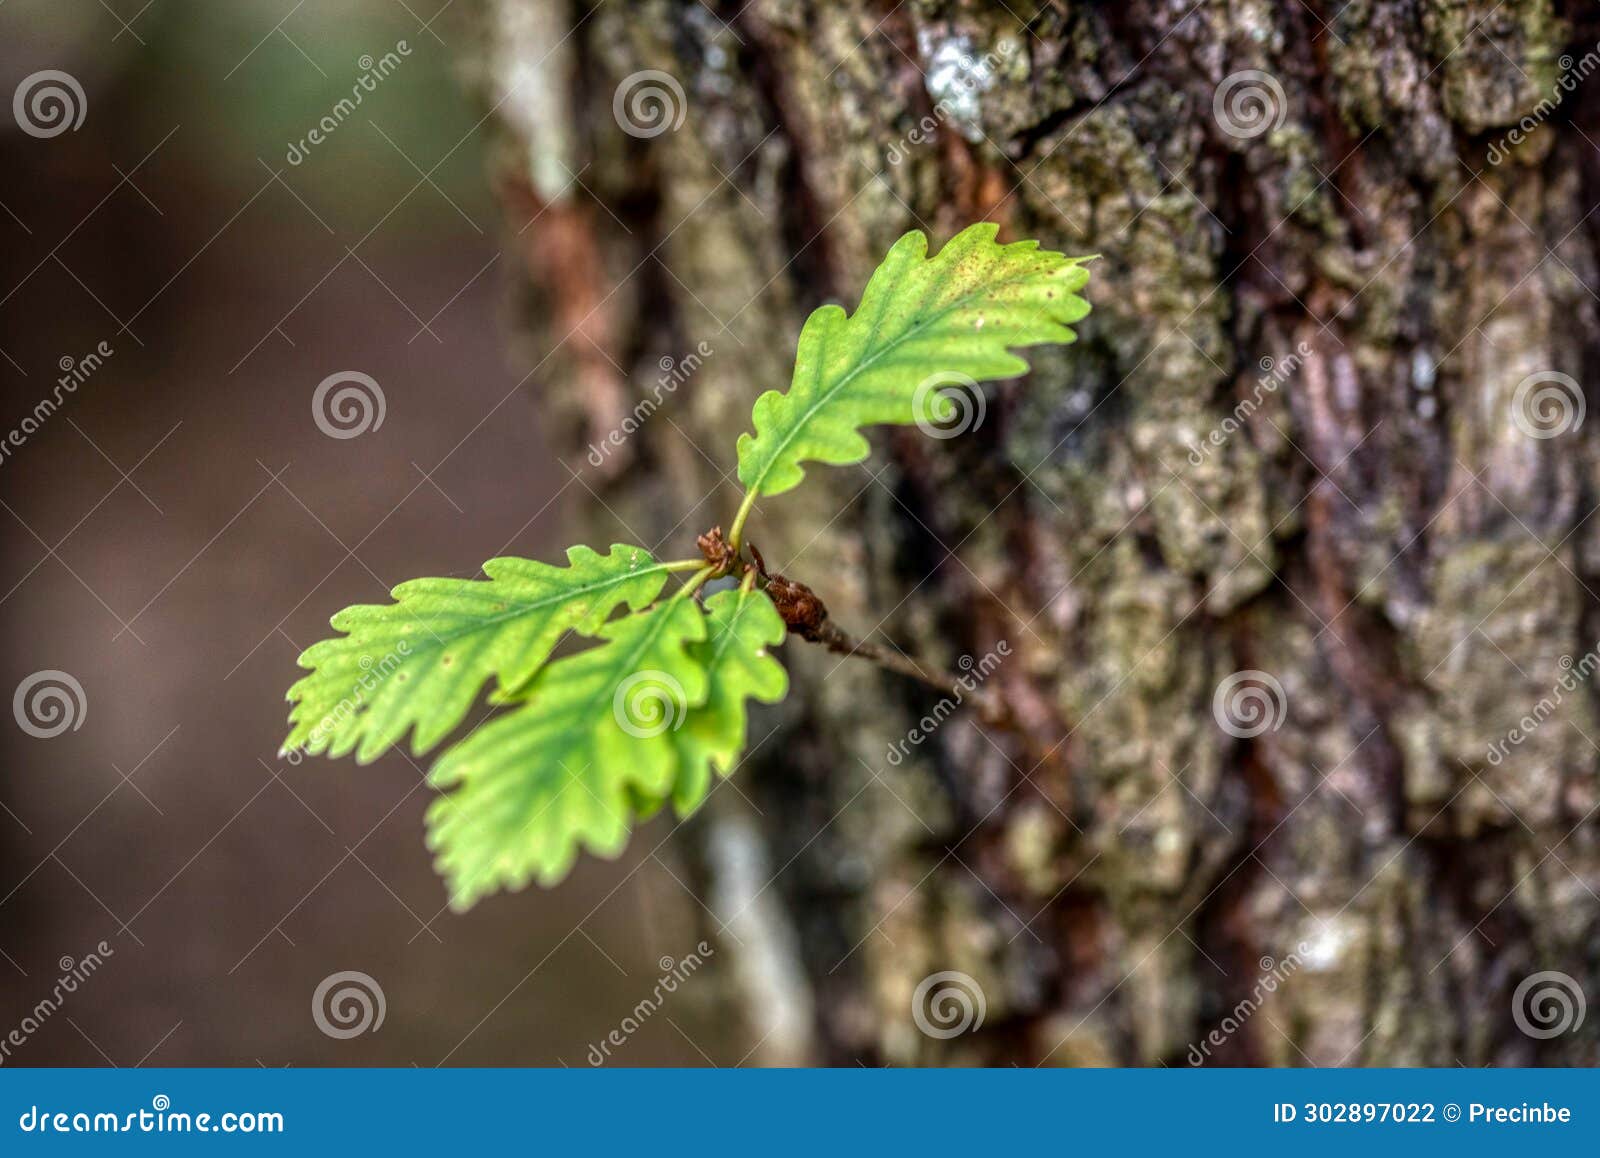 branch and leaves of oak tree. Oak Branch of leaves in the oak trunk tree in autumn in forest